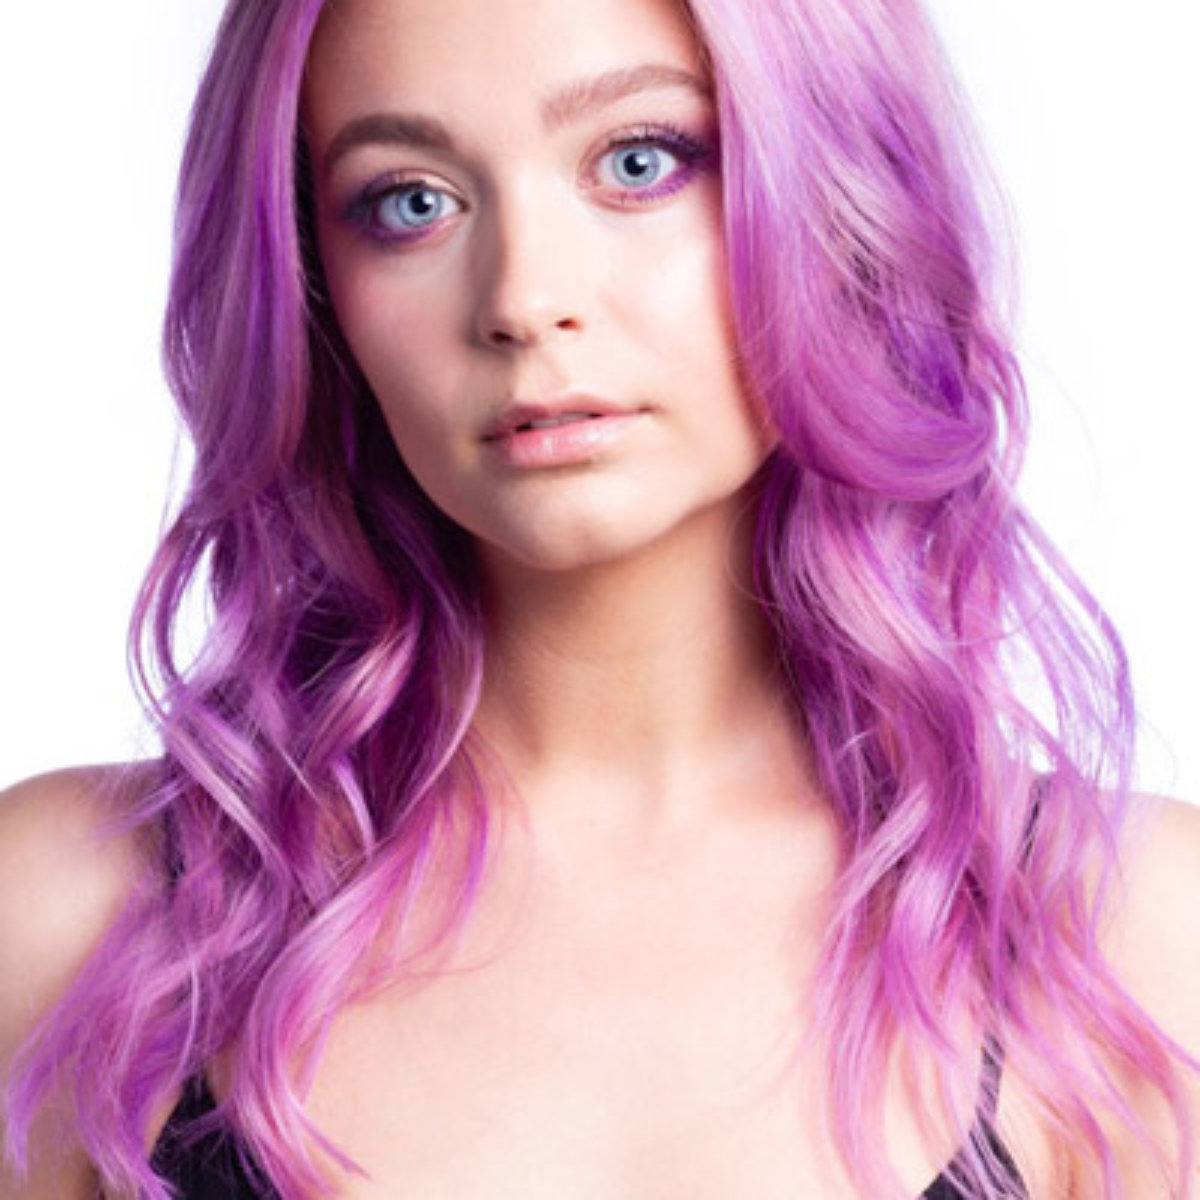 Larisa Love hair model showing purple hair color